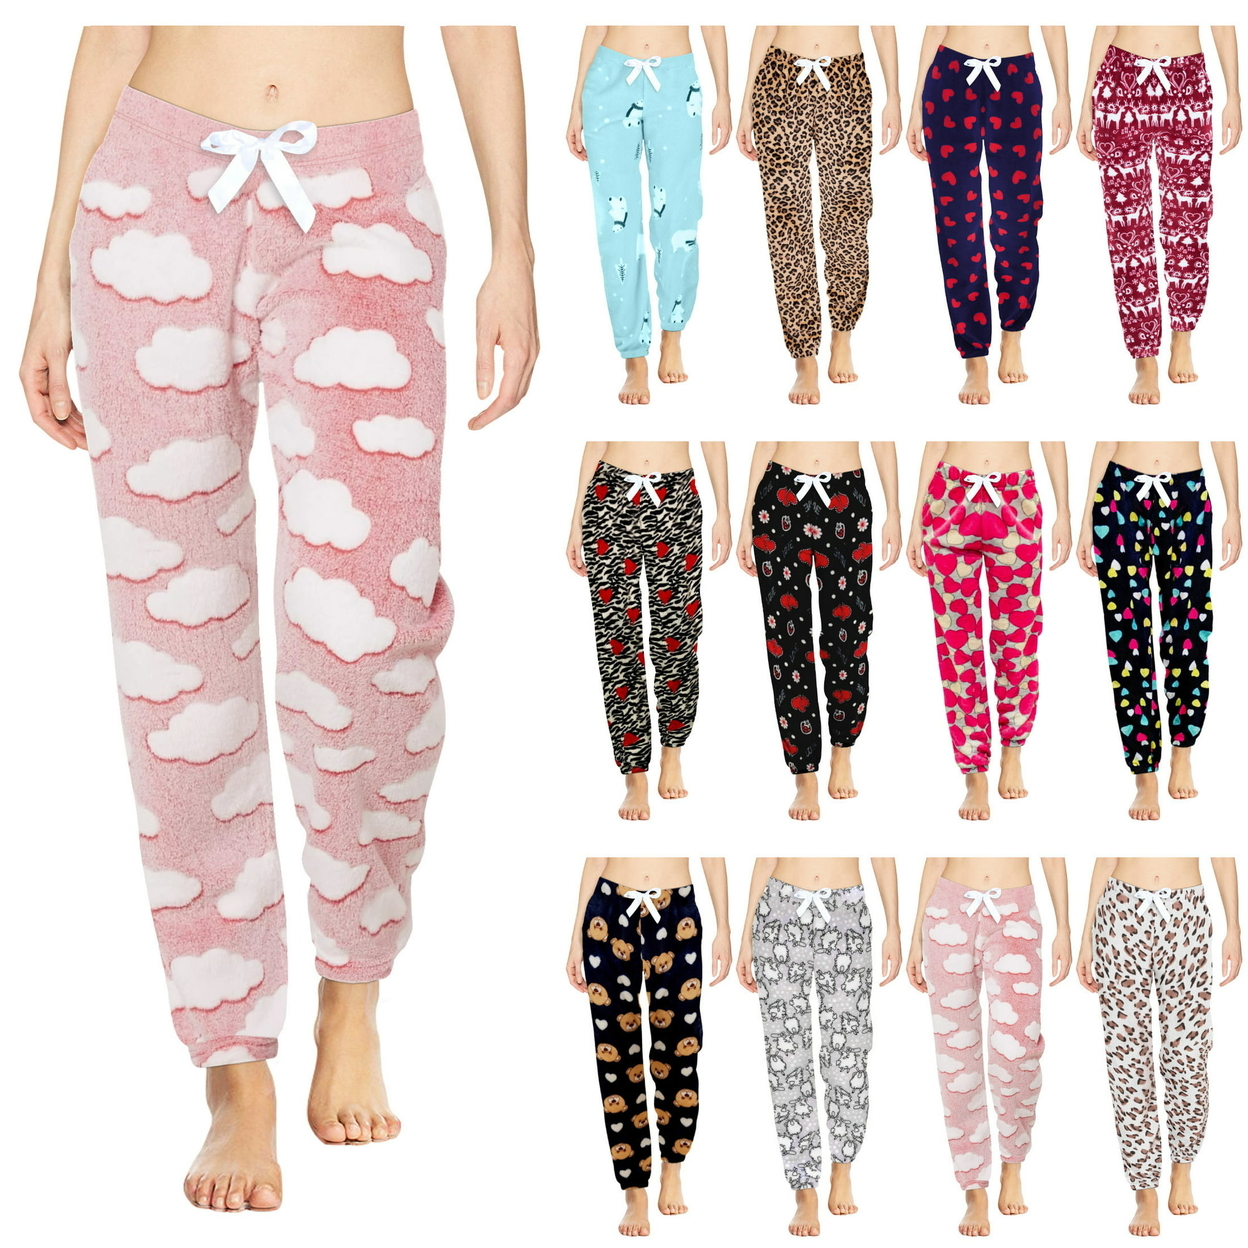 4-Pack: Women's Solid & Printed Ultra-Soft Comfy Stretch Micro-Fleece Pajama Lounge Pants - Medium, Love